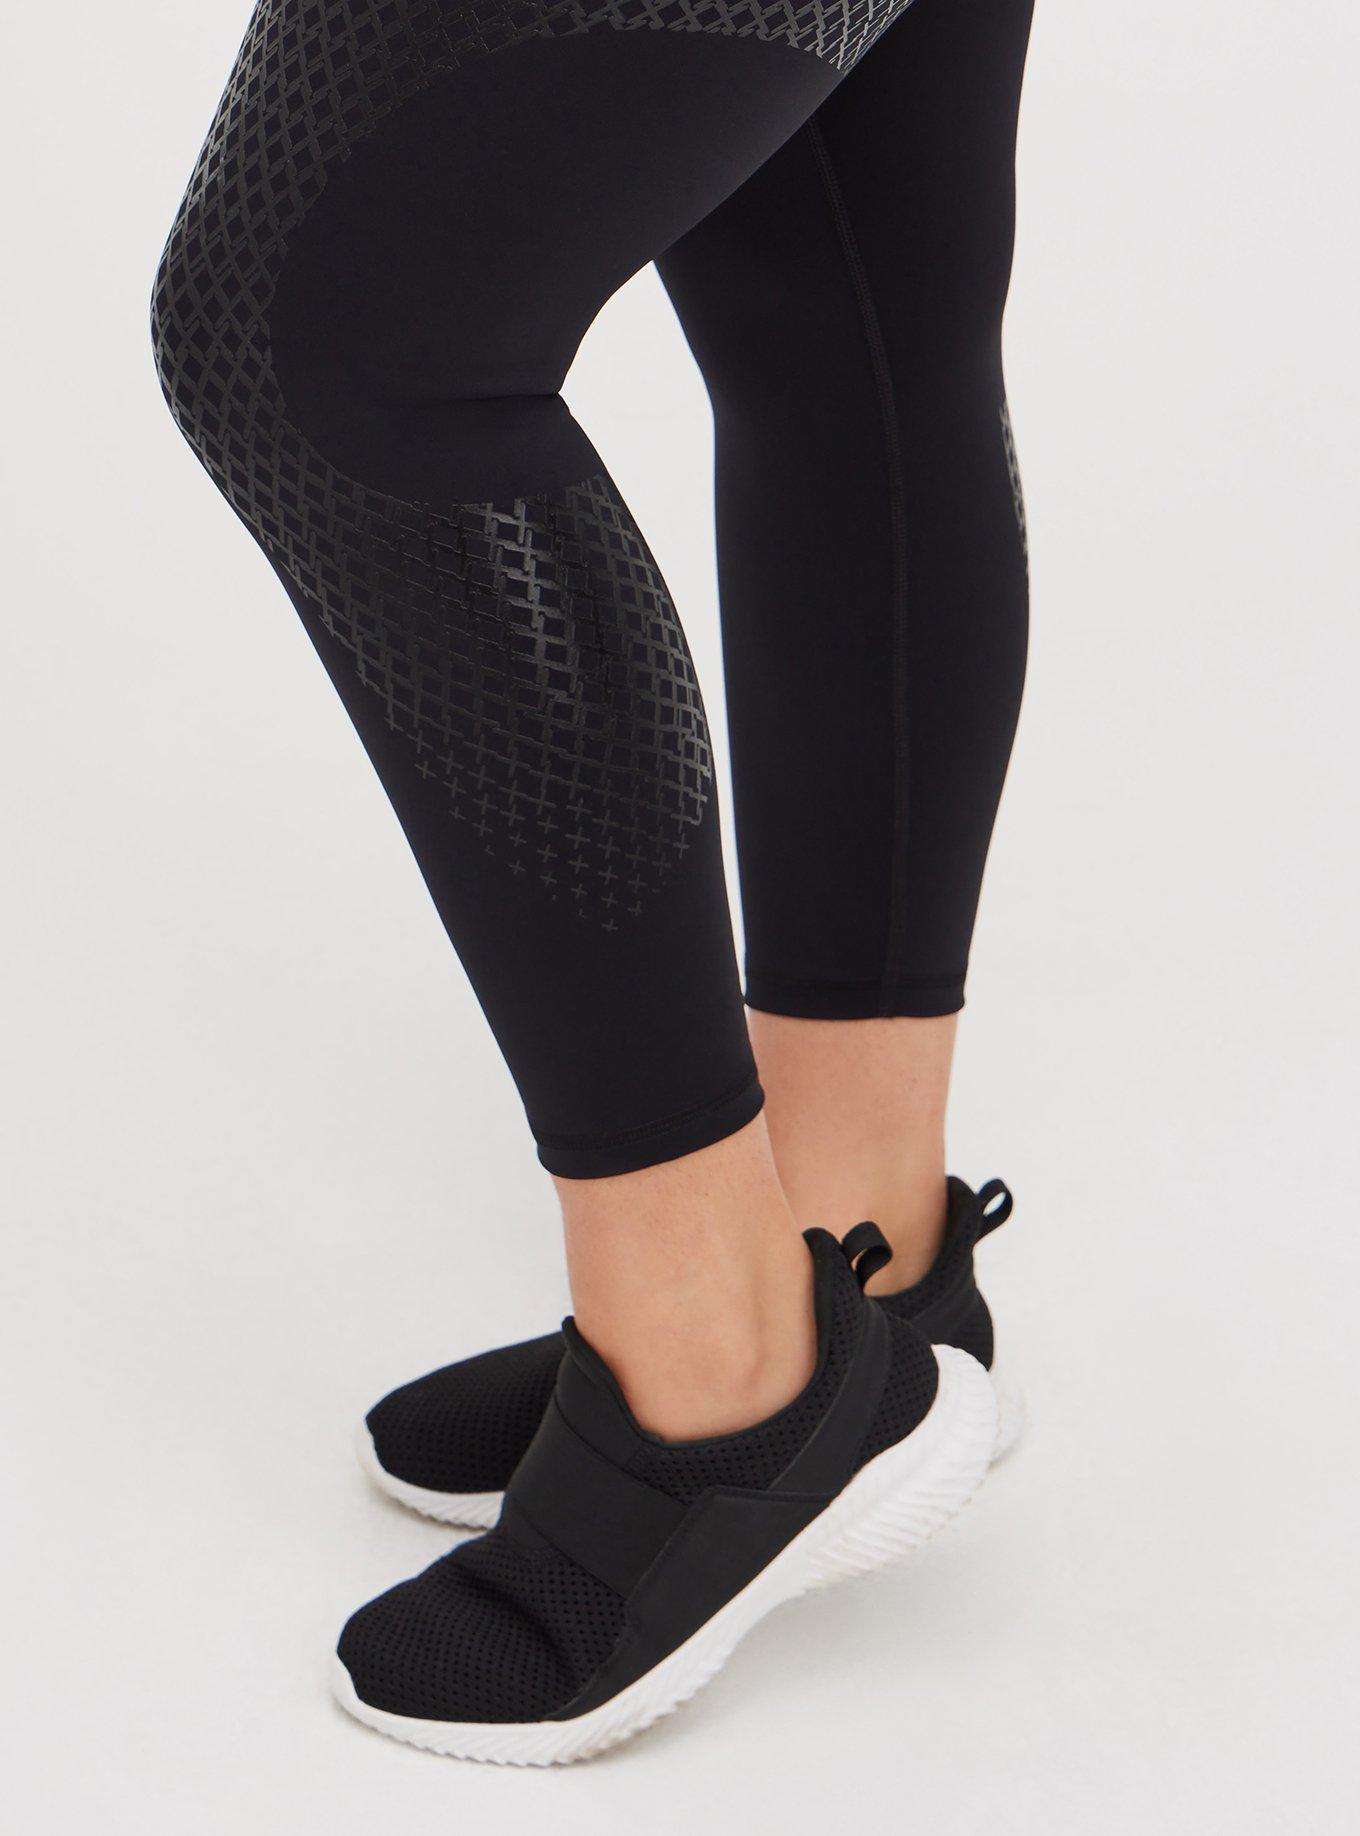 HUE Women's Black Body Gloss Leggings with Moto Seam Details Sz Large 12/14